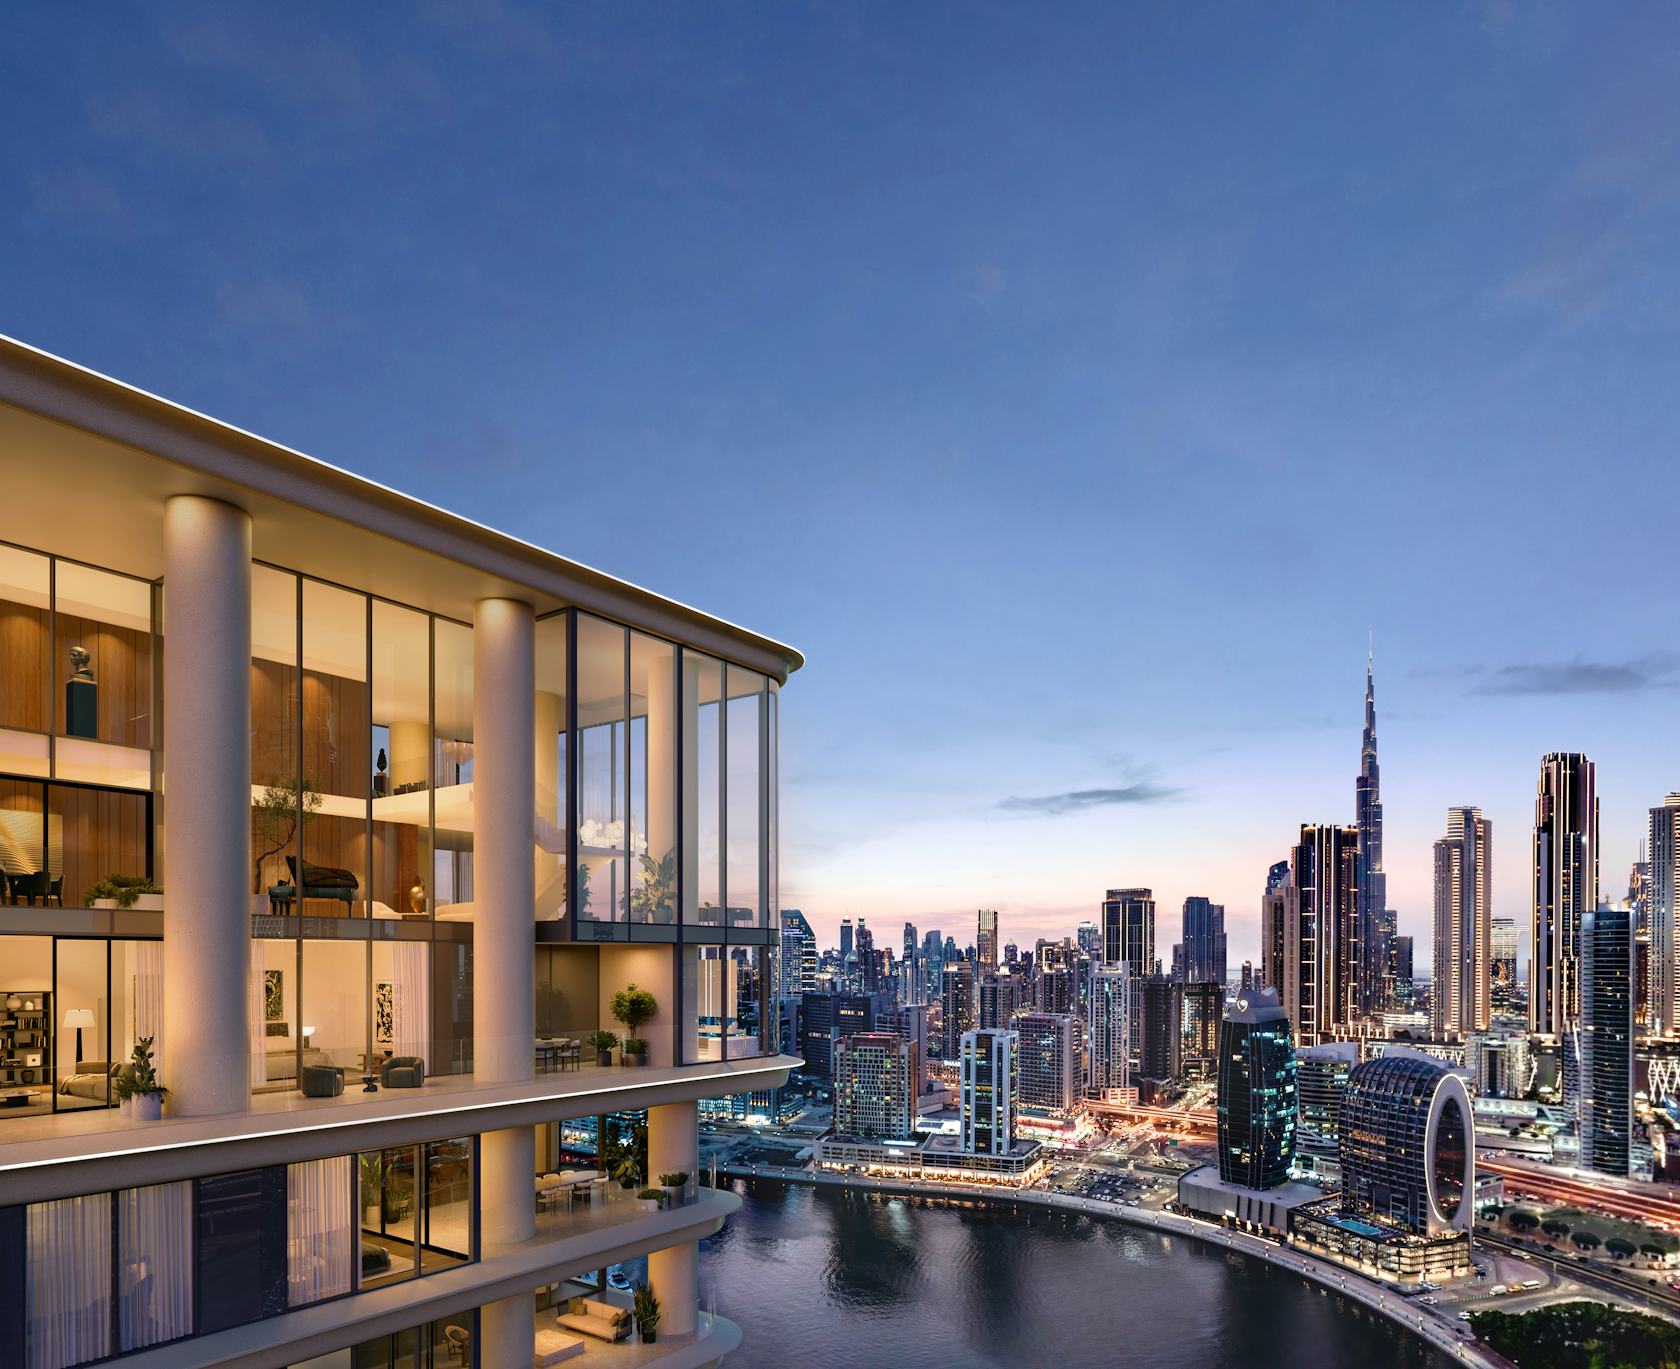 city urban cityscape metropolis office building high rise condo plant waterfront scenery